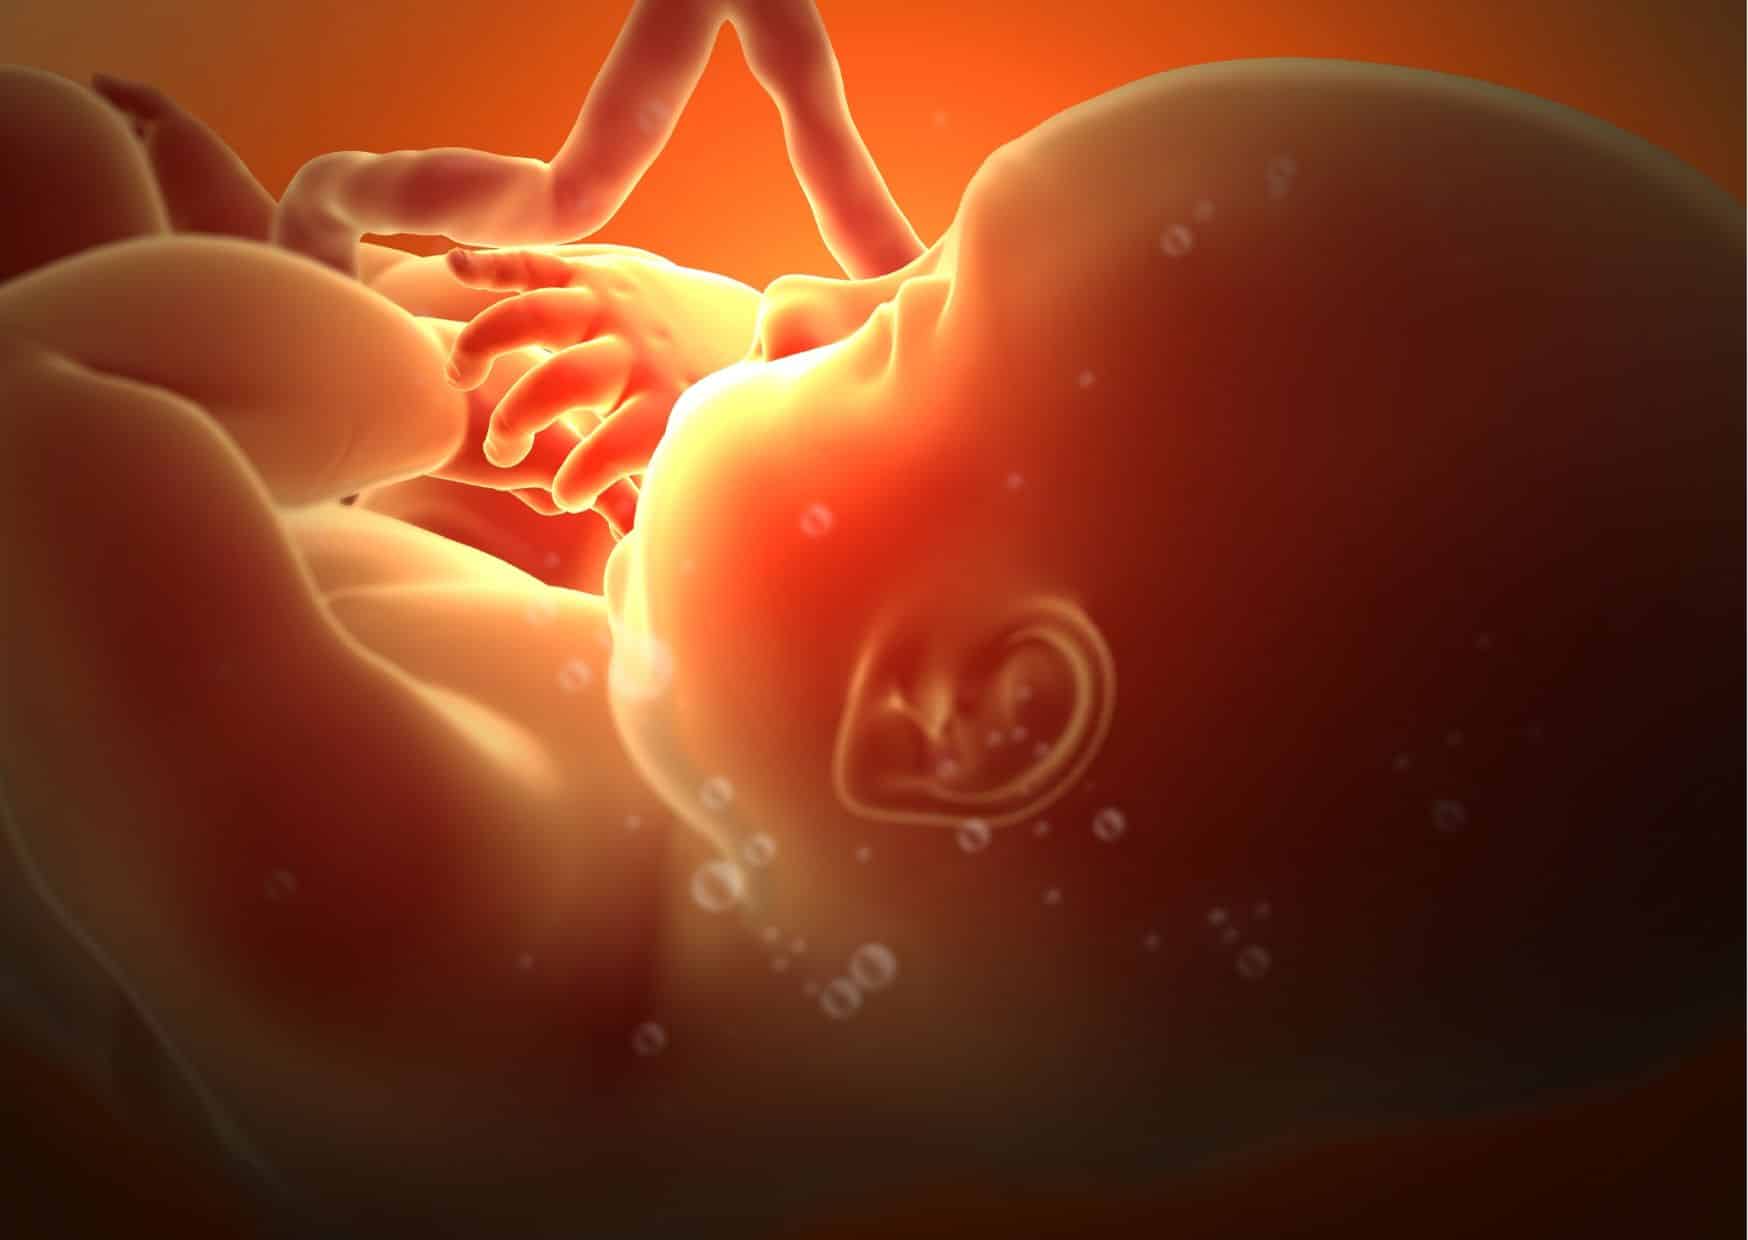 statut du foetus juridique pierre palmade enfant in utero